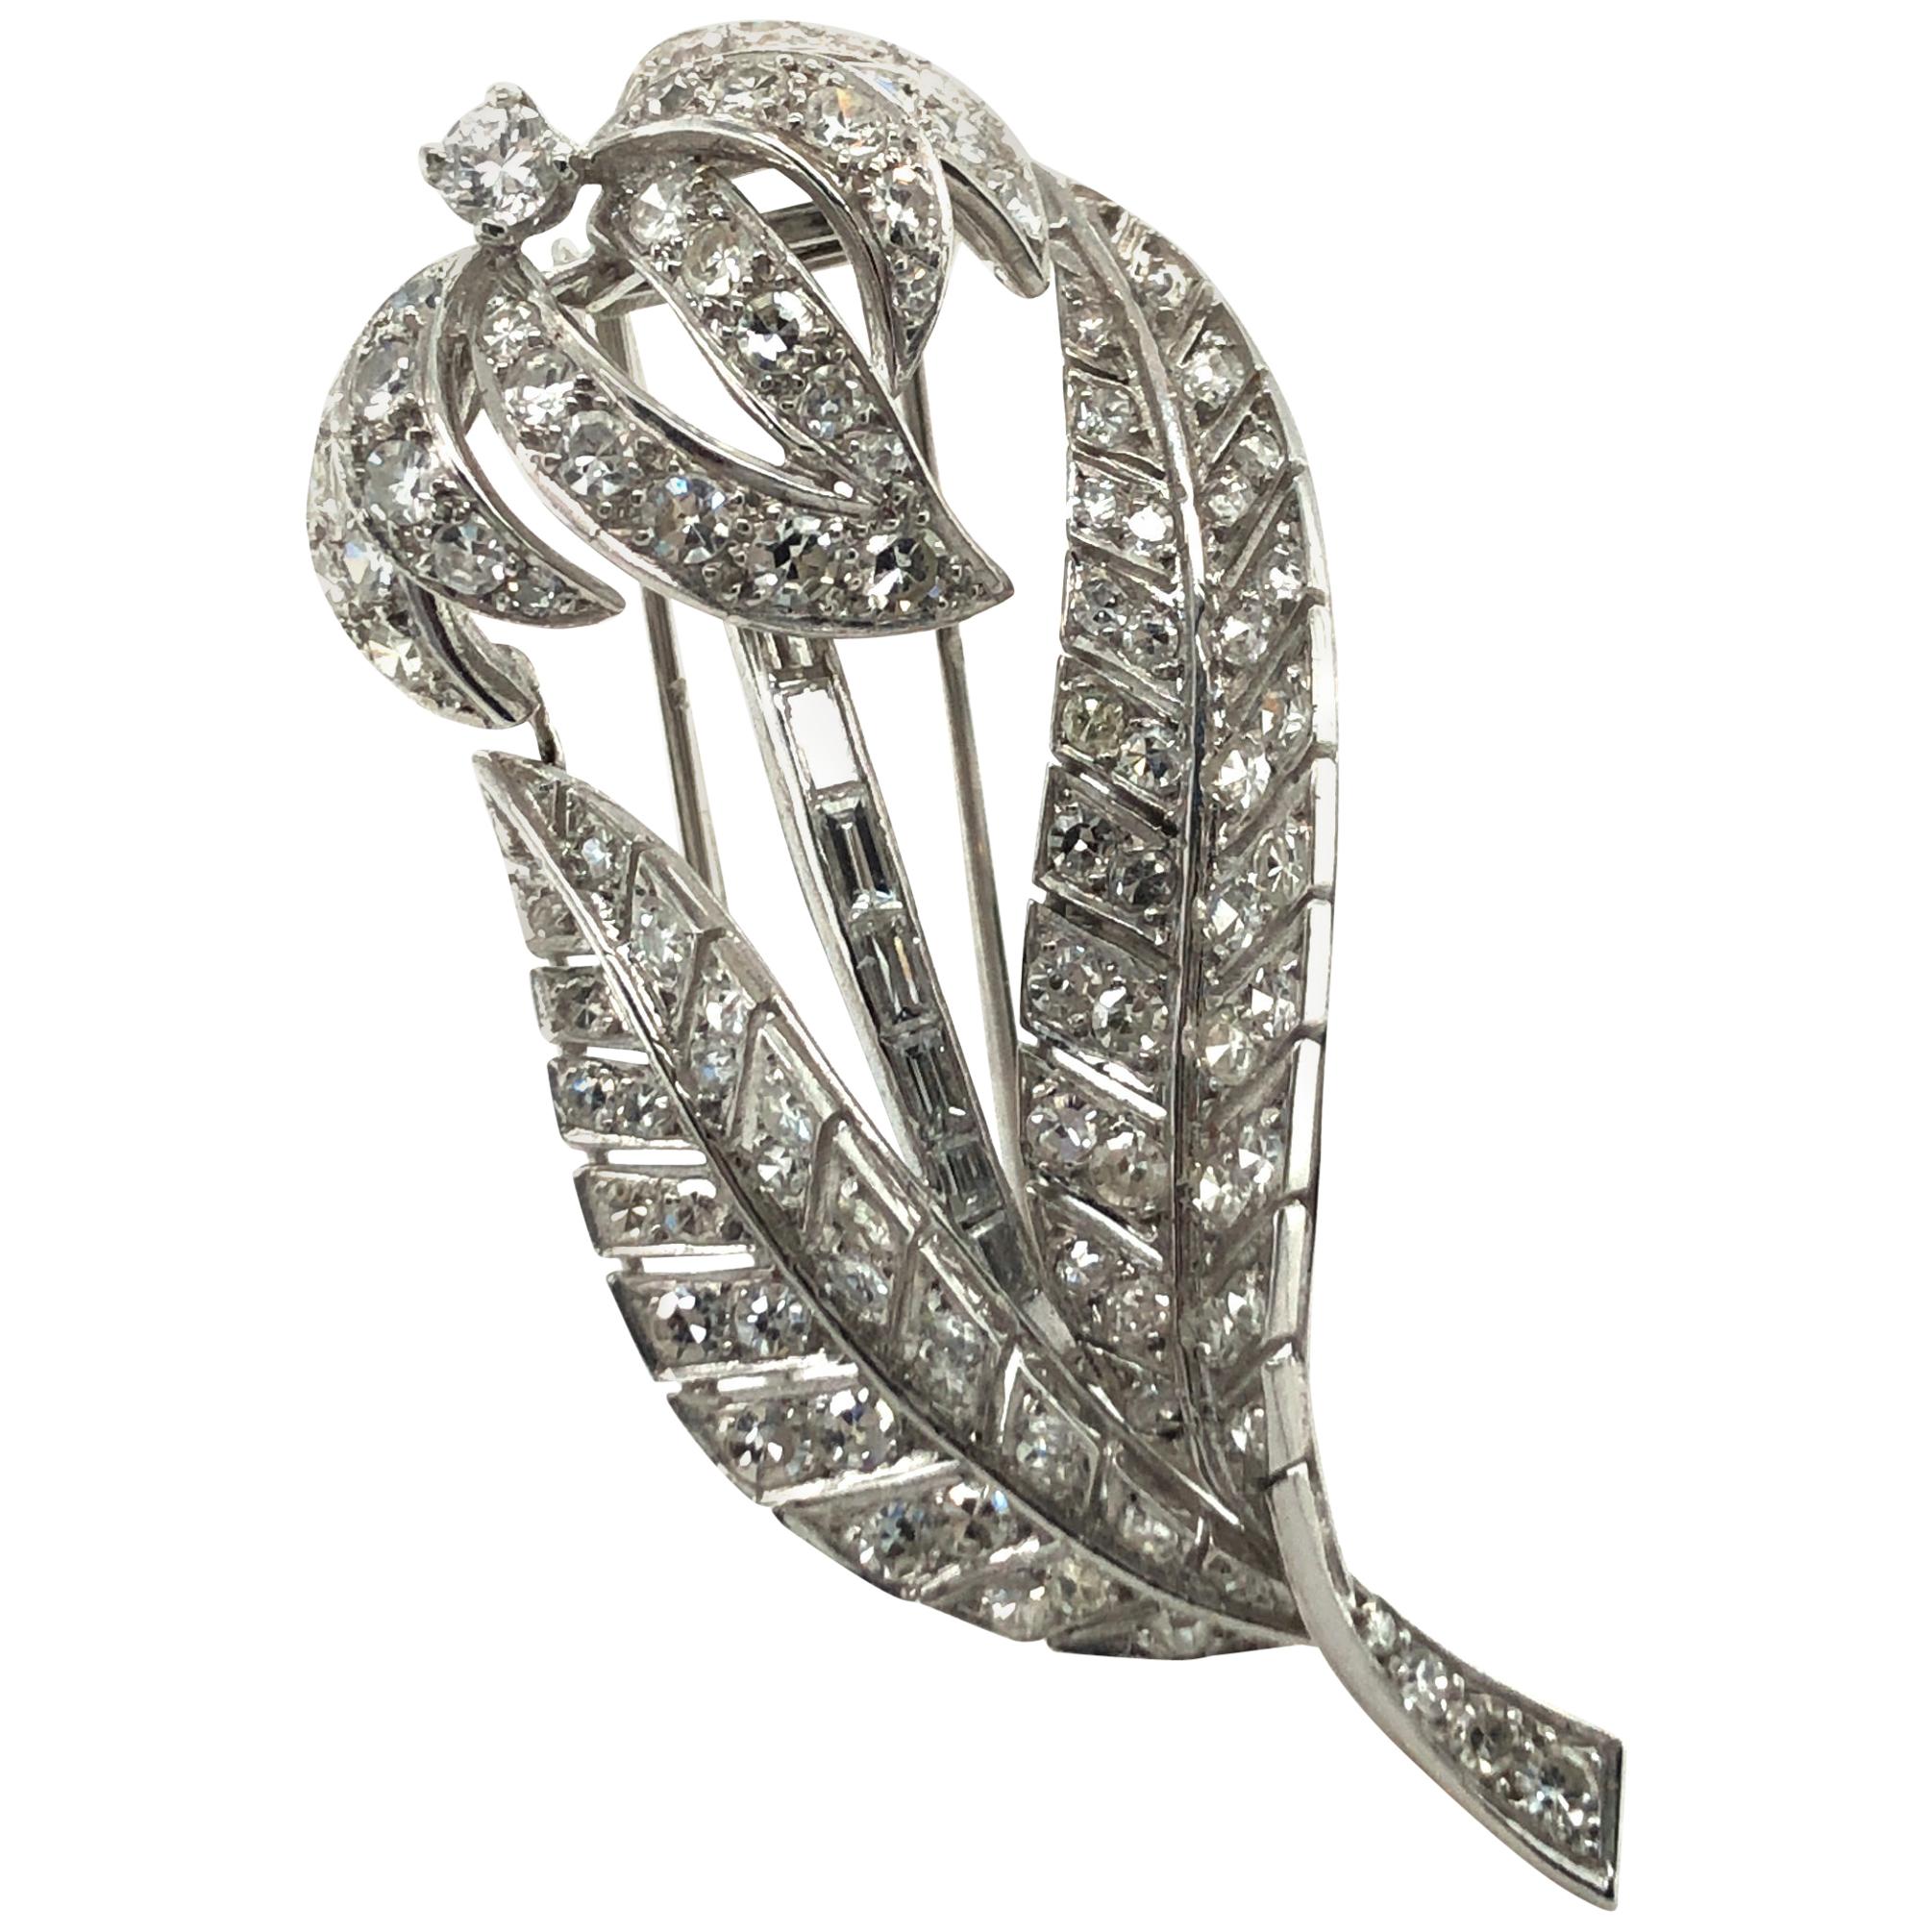 Art Deco Style Diamond Brooch in Platinum 950